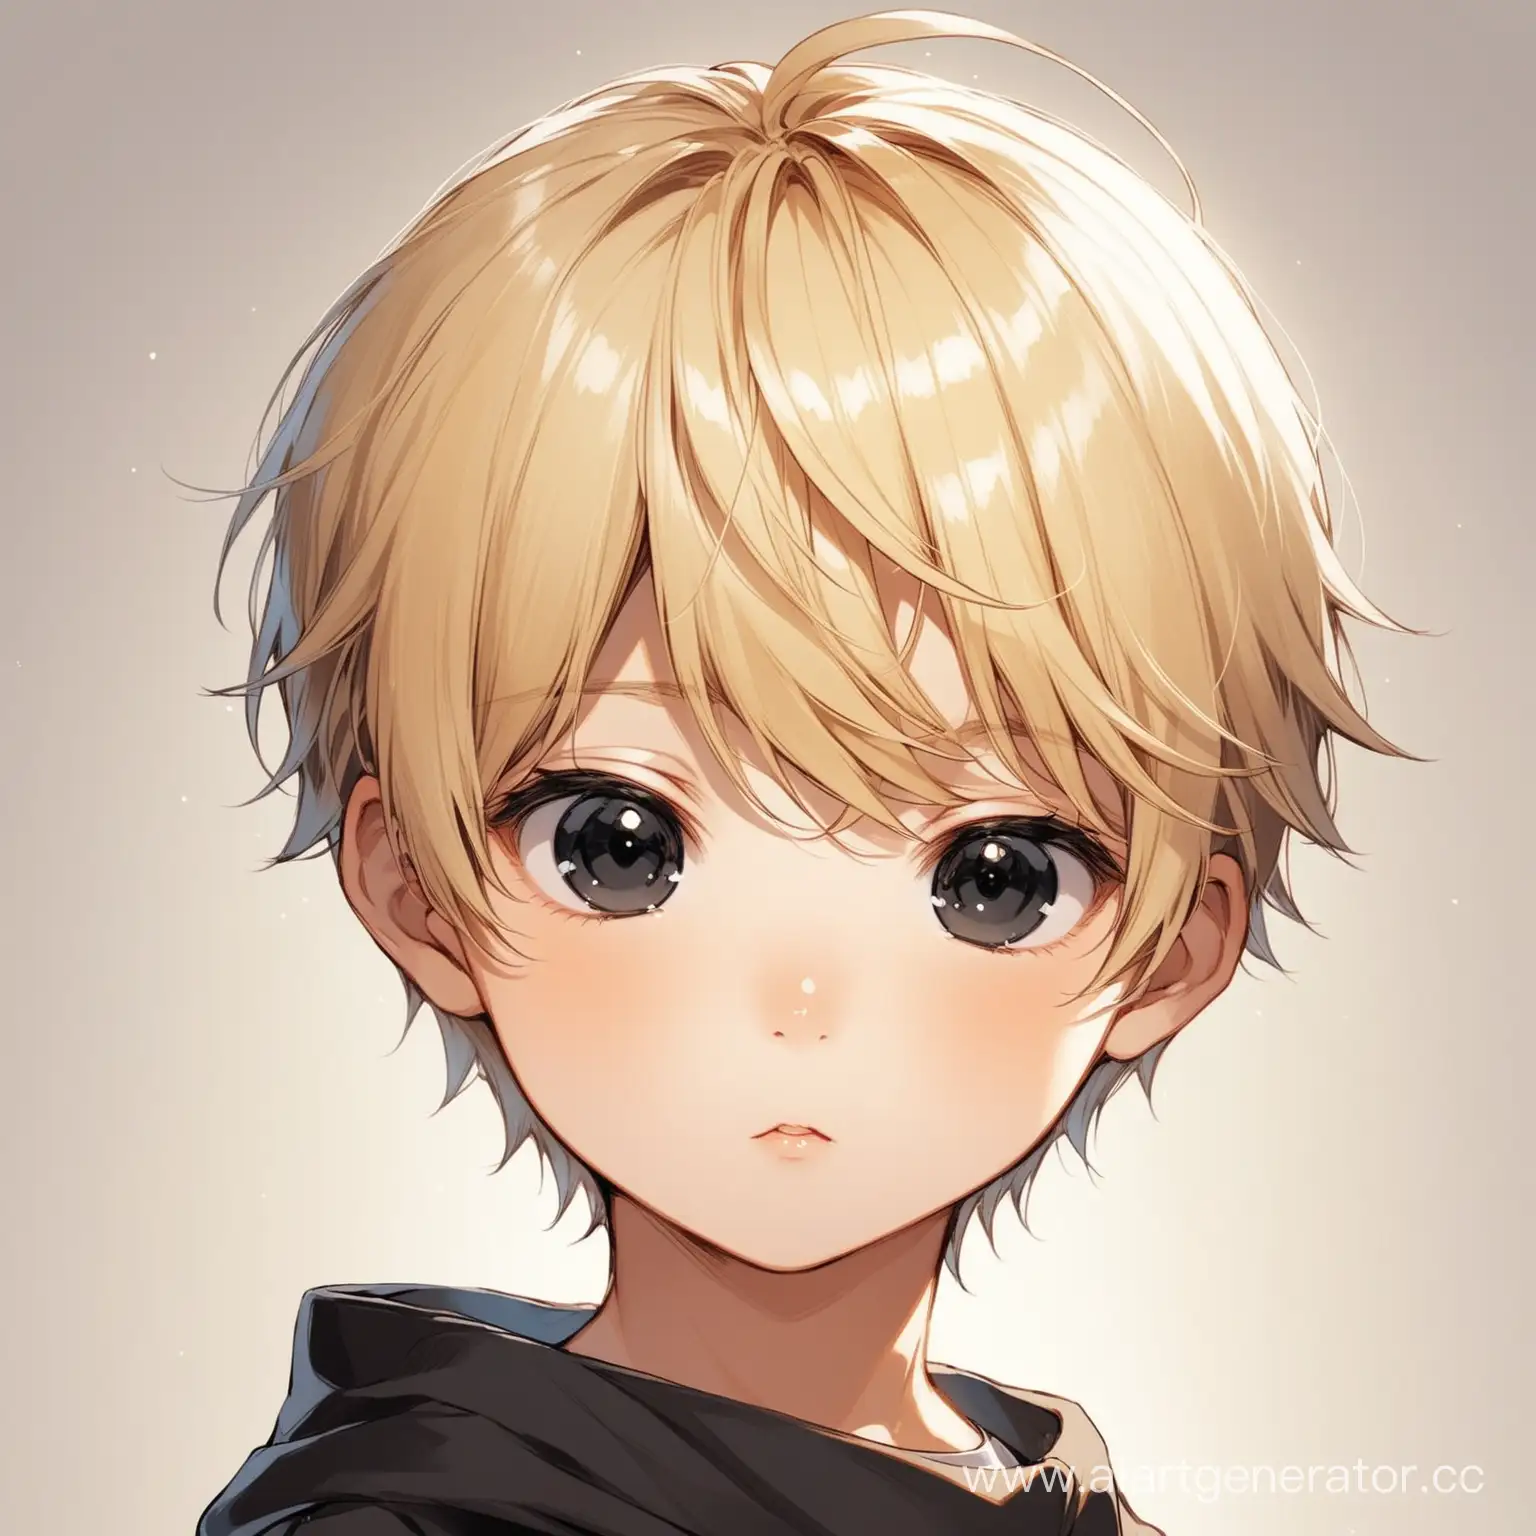 little boy, short blond hair, black eyes